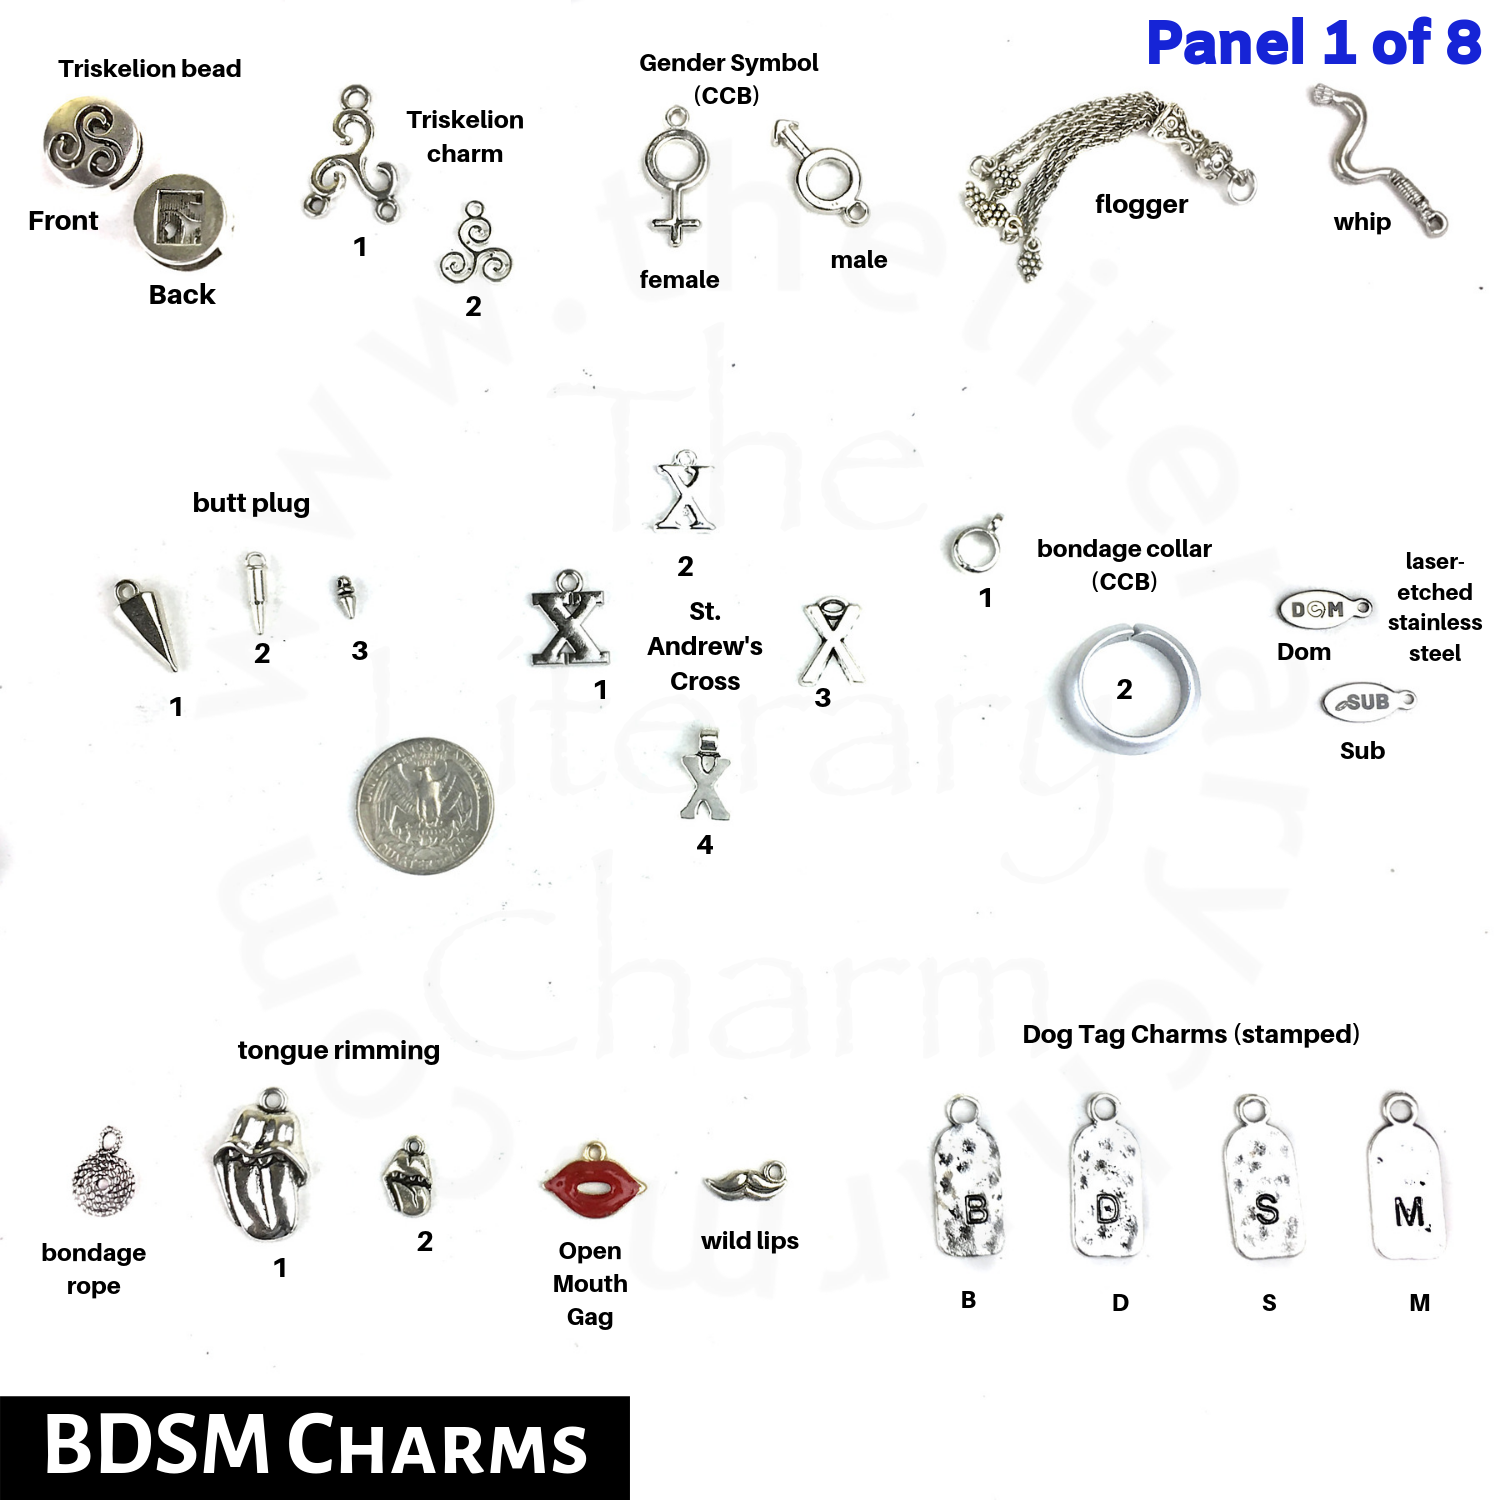 BDSM Pewter Charms, bdsm collar, bdsm toys, bdsm jewelry, kink toys, Triskelion symbol, Bondage, Submissives, Dominatrix, Erotica, dungeon favors, dom sub